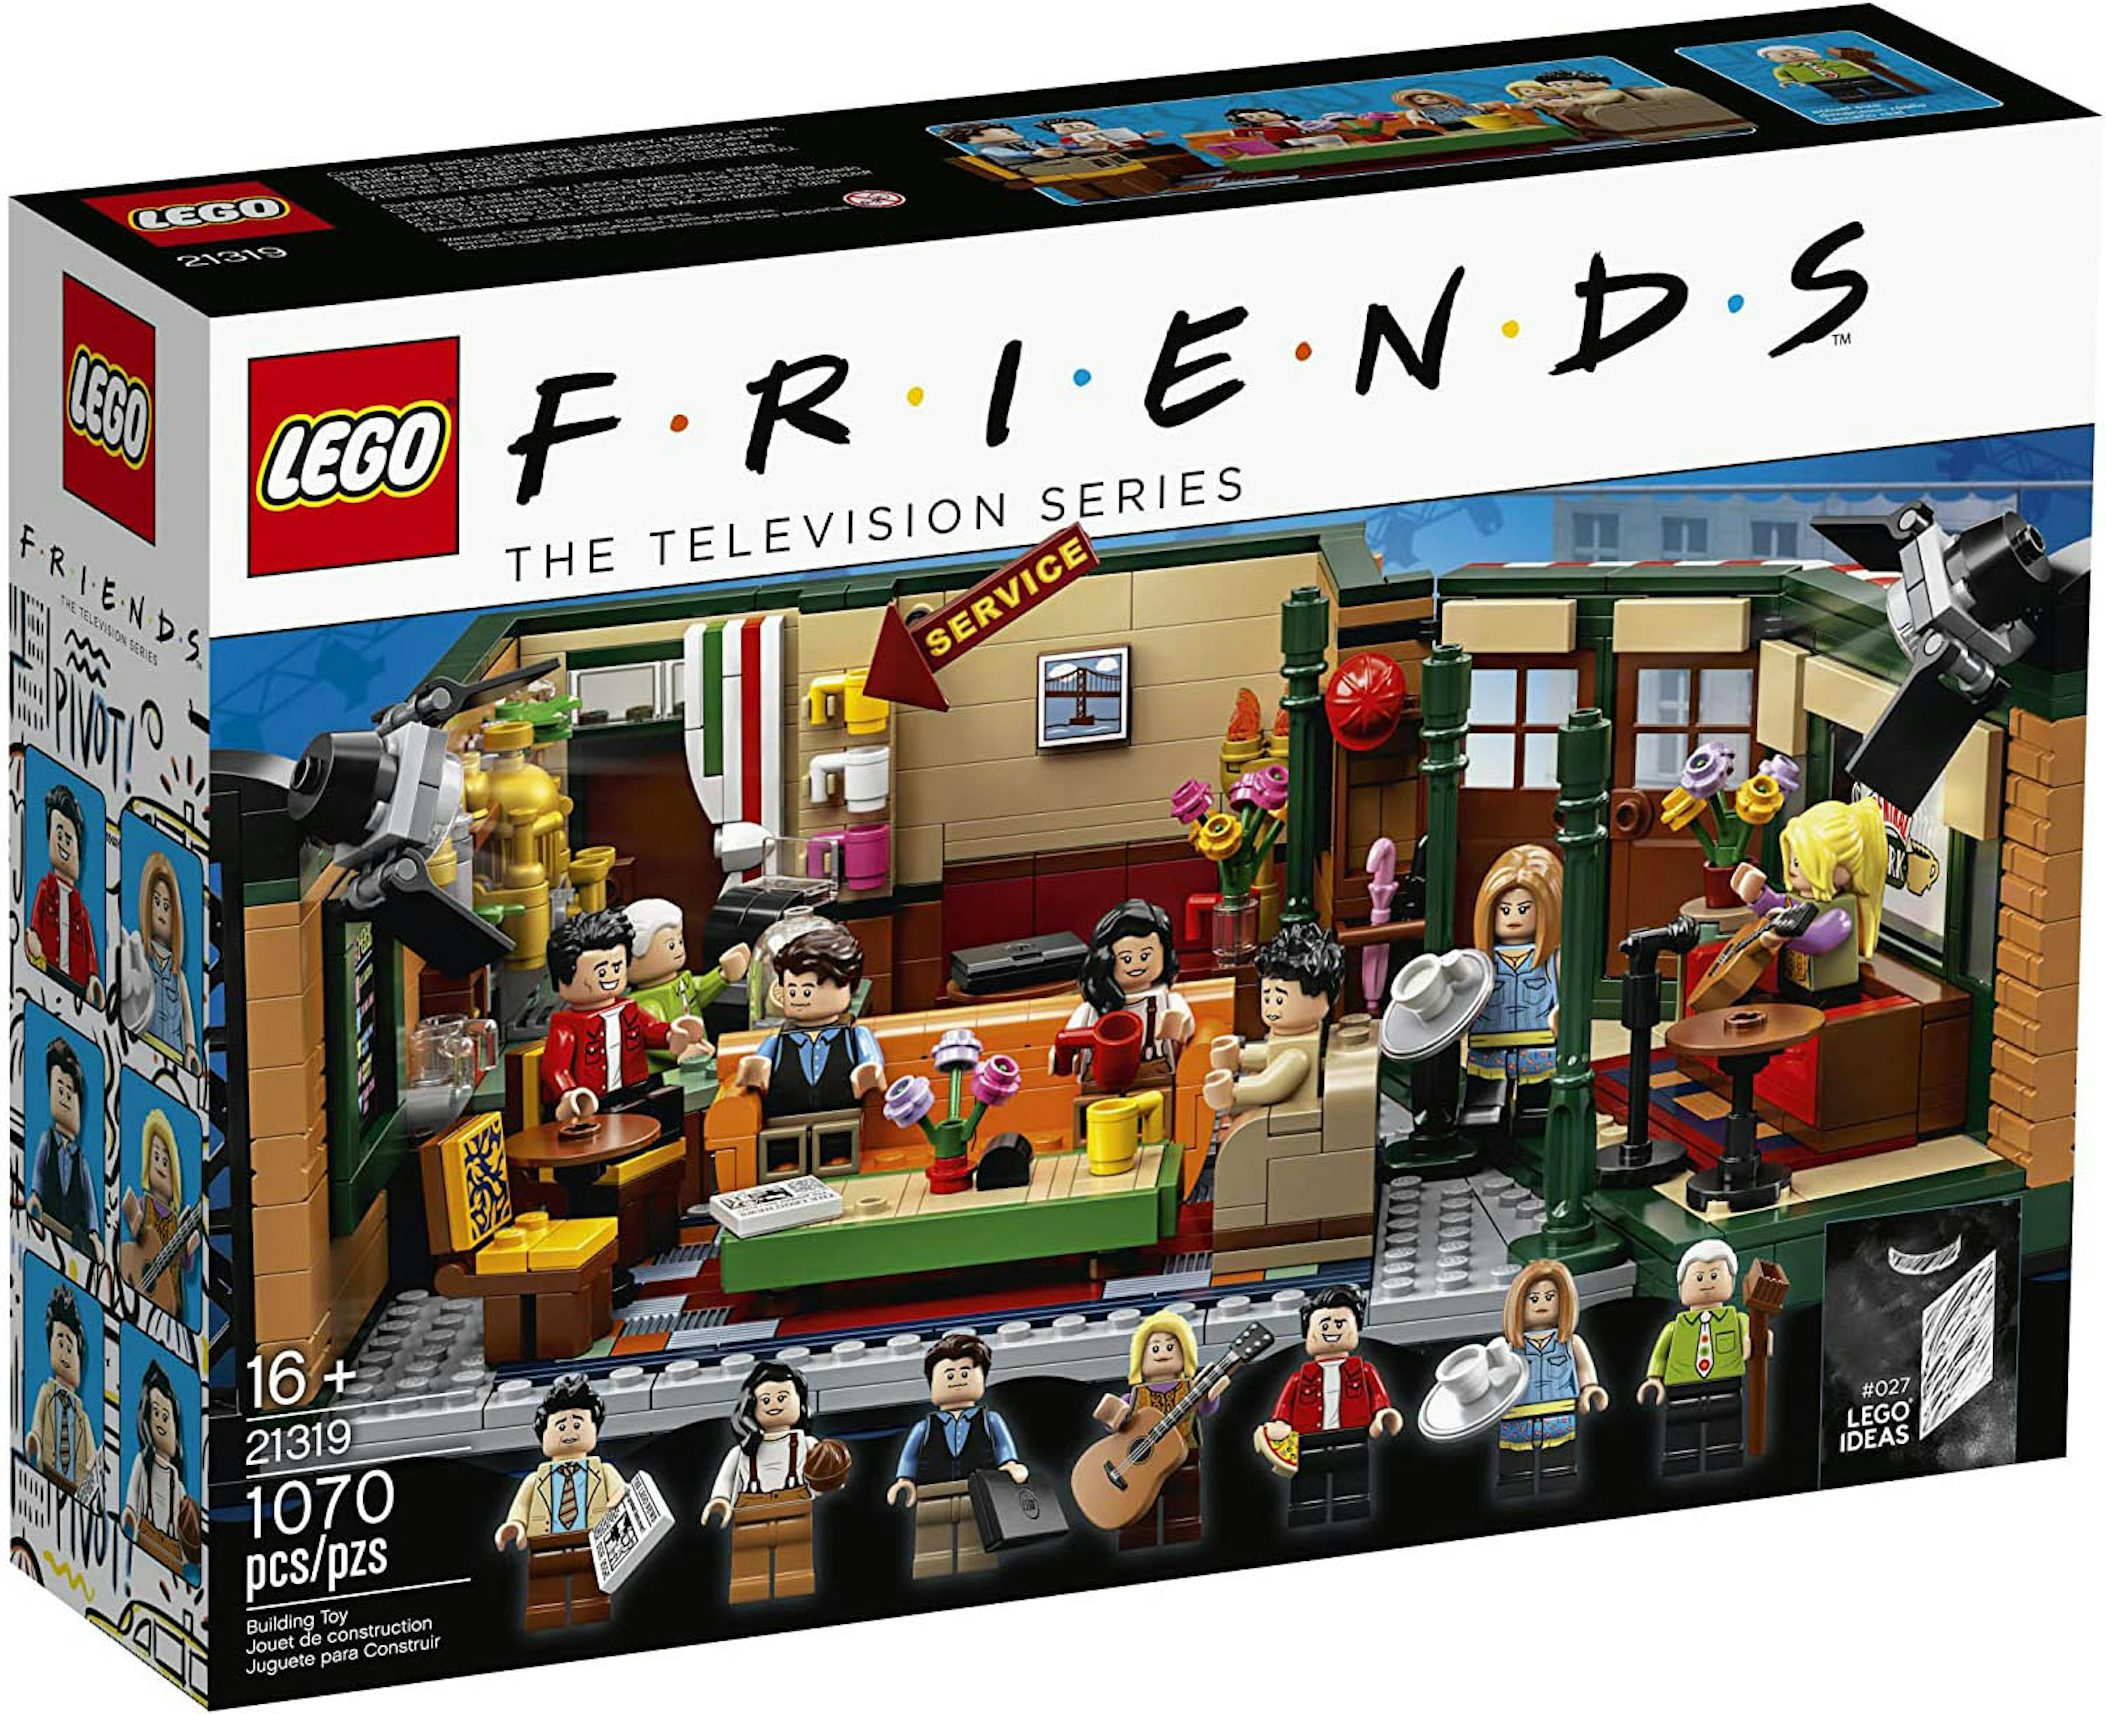 LEGO Ideas FRIENDS Central Perk Set 21319 - US